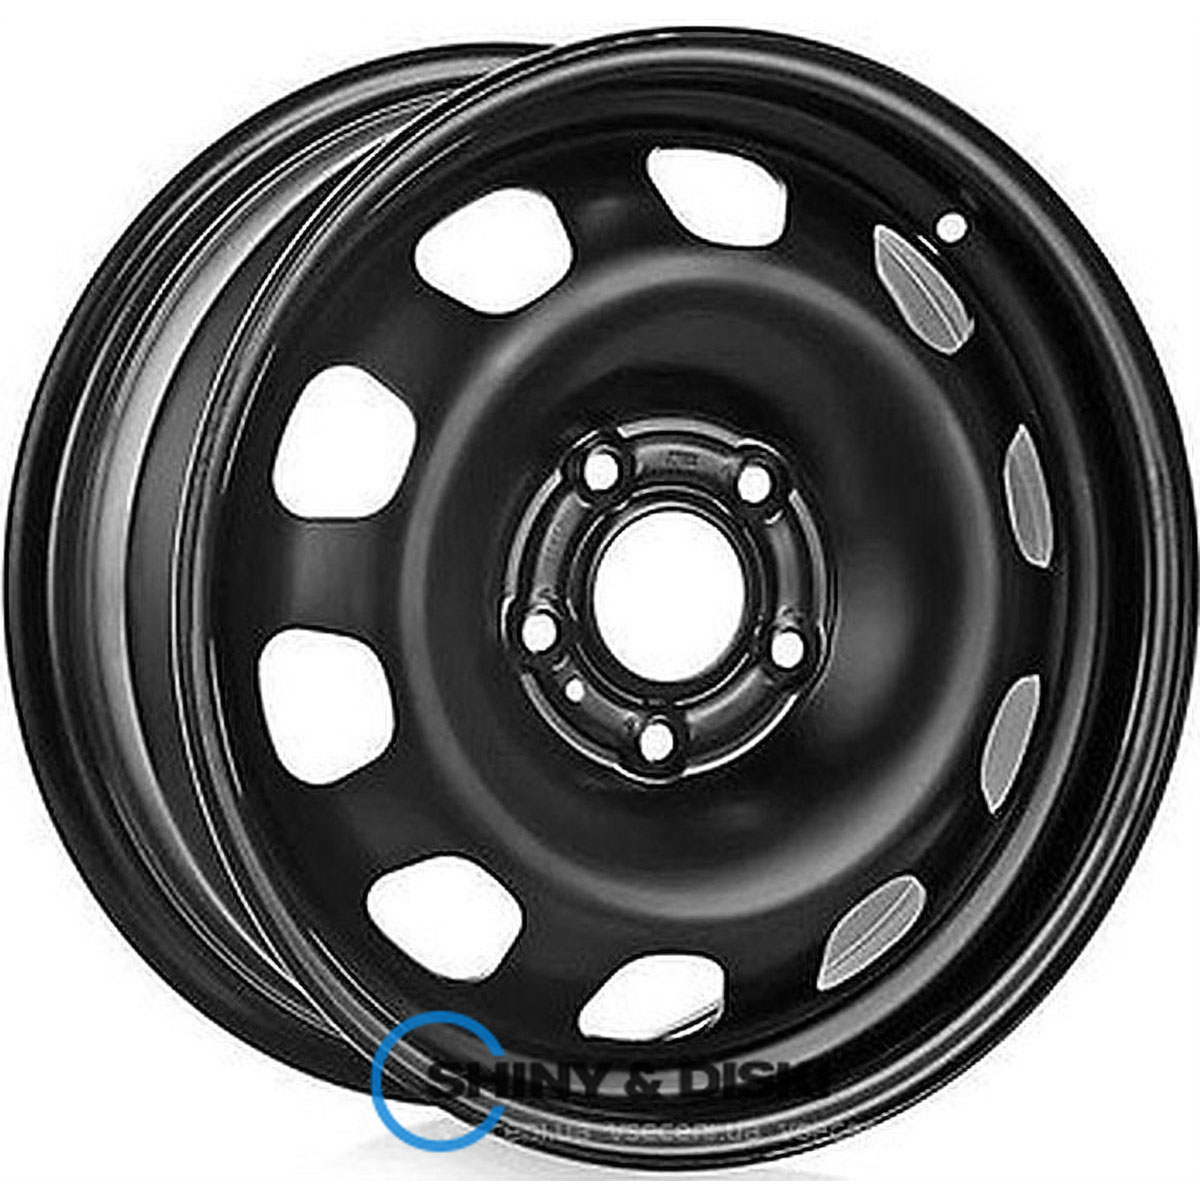 magnetto wheels 16003 b